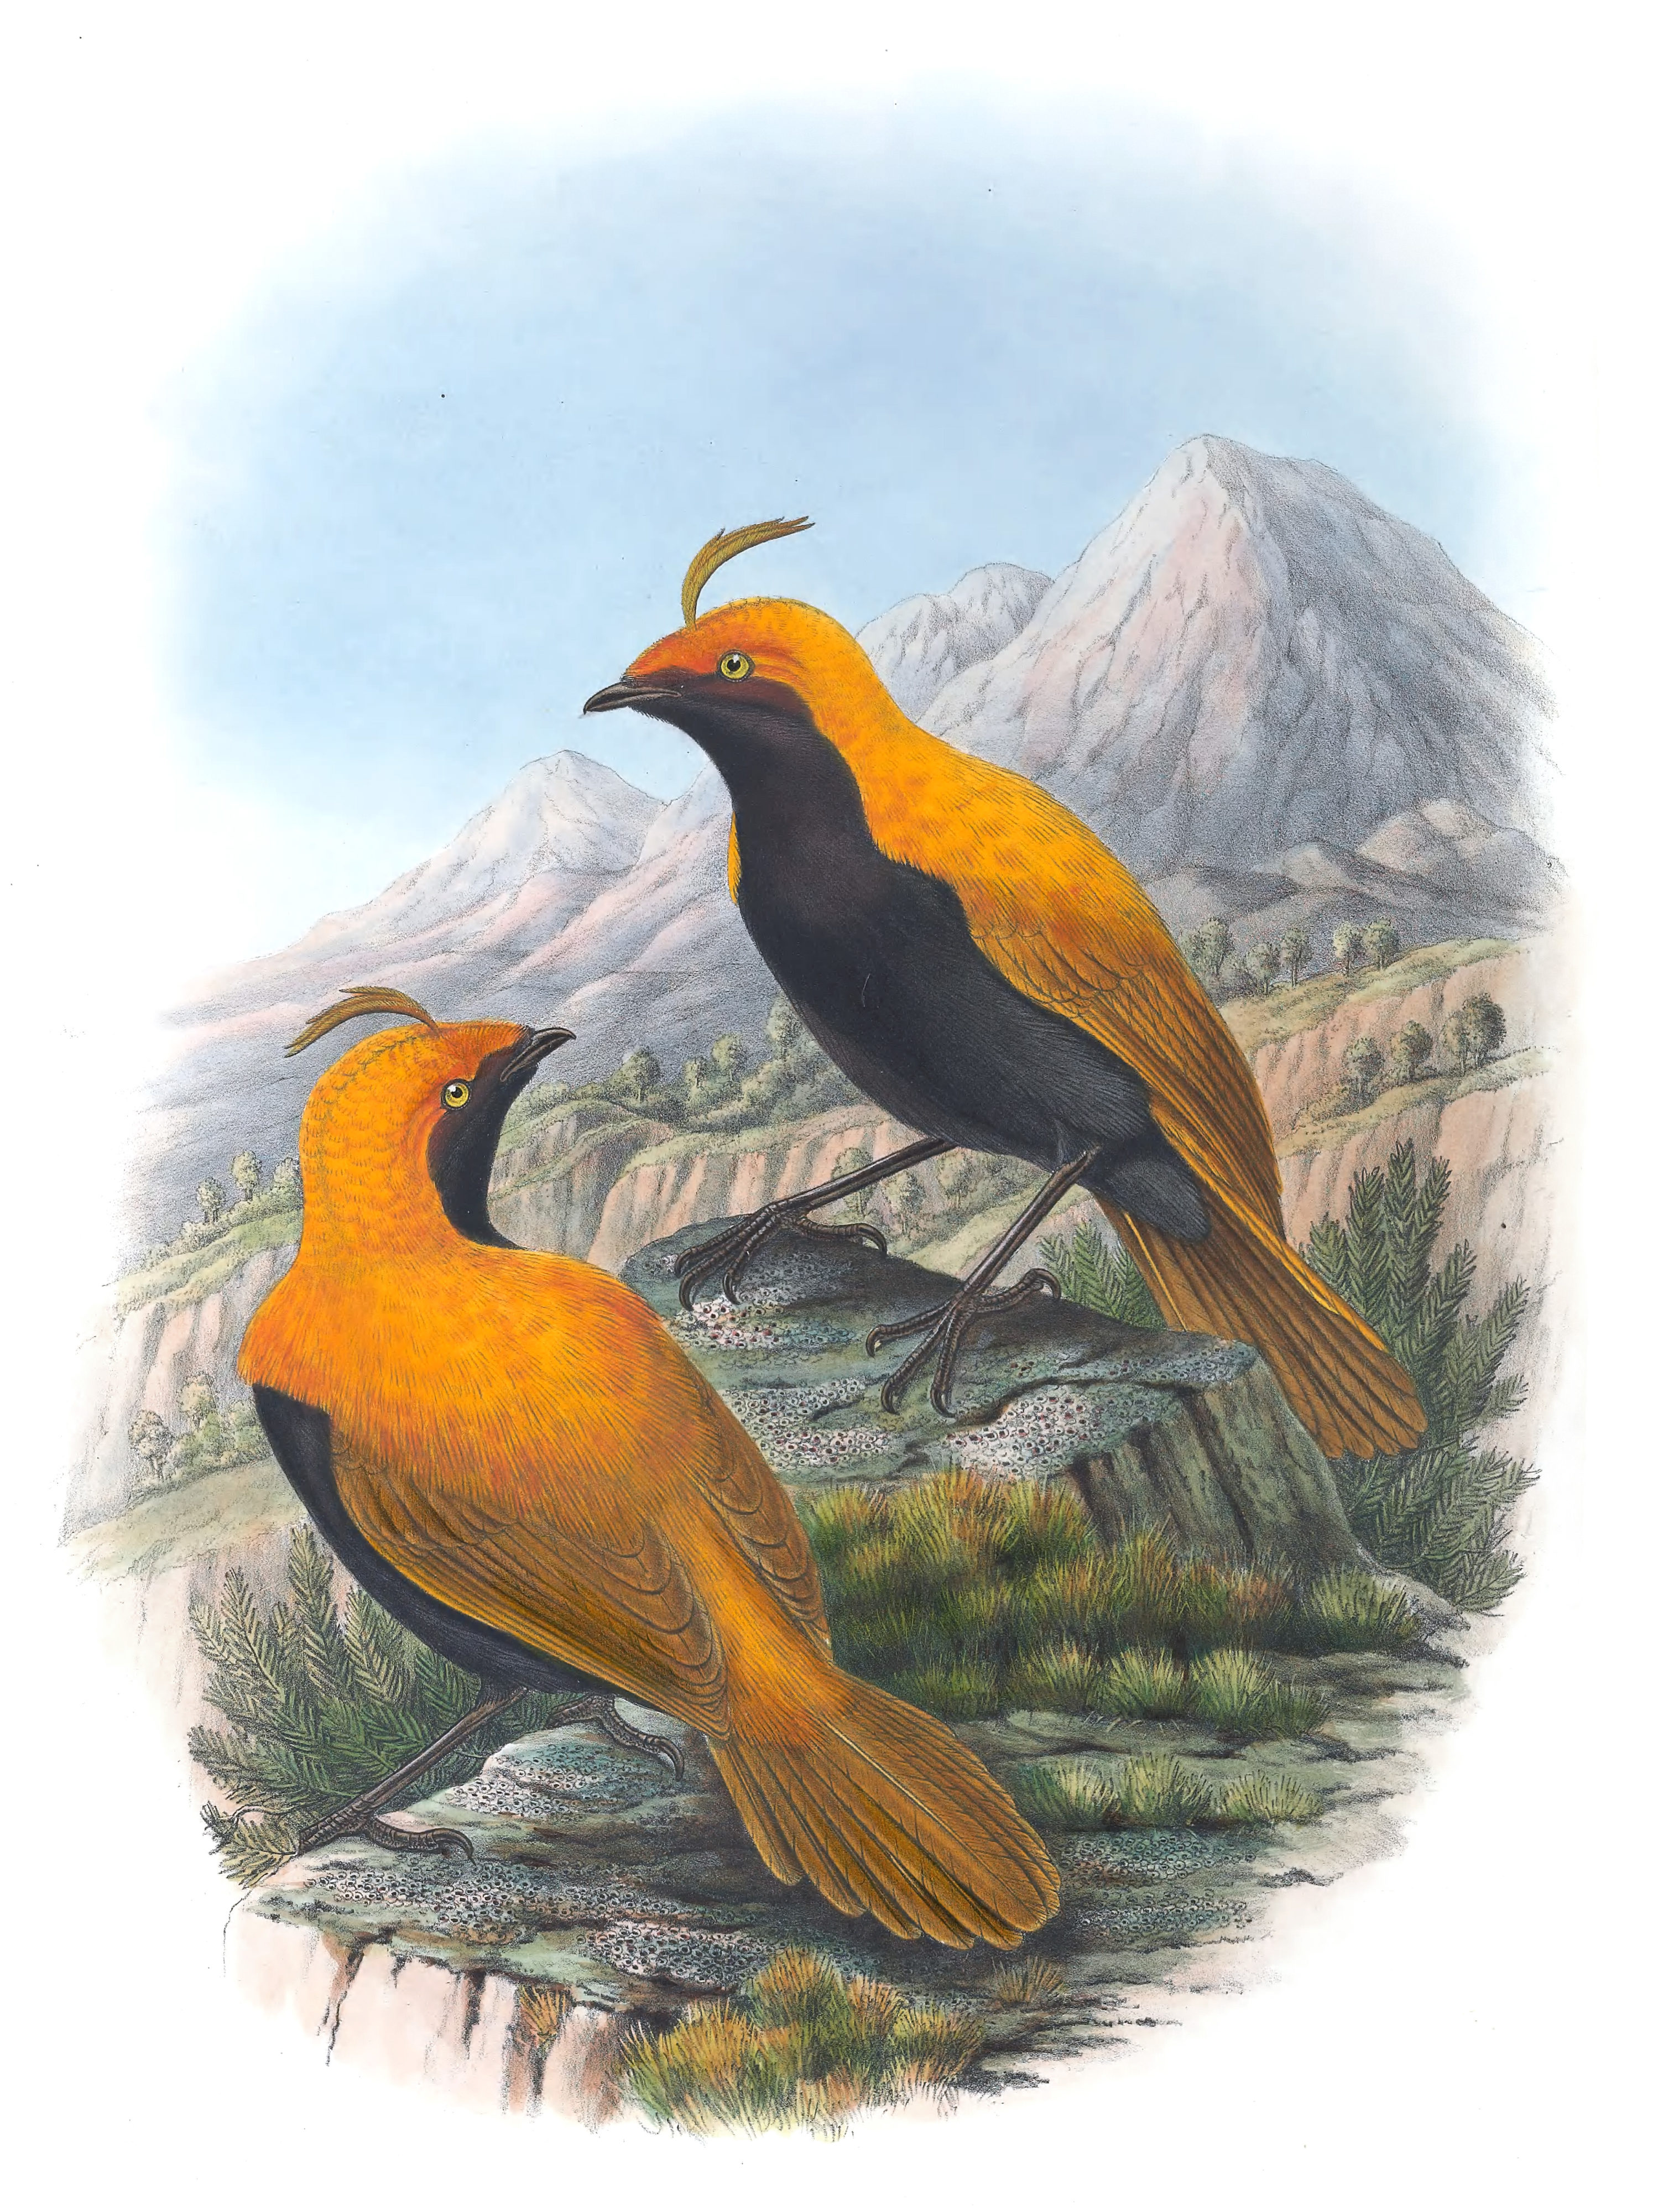 Macgregors-Bird-Of-Paradise-Cnemophilus-Macgregori-Vintage-Illustration